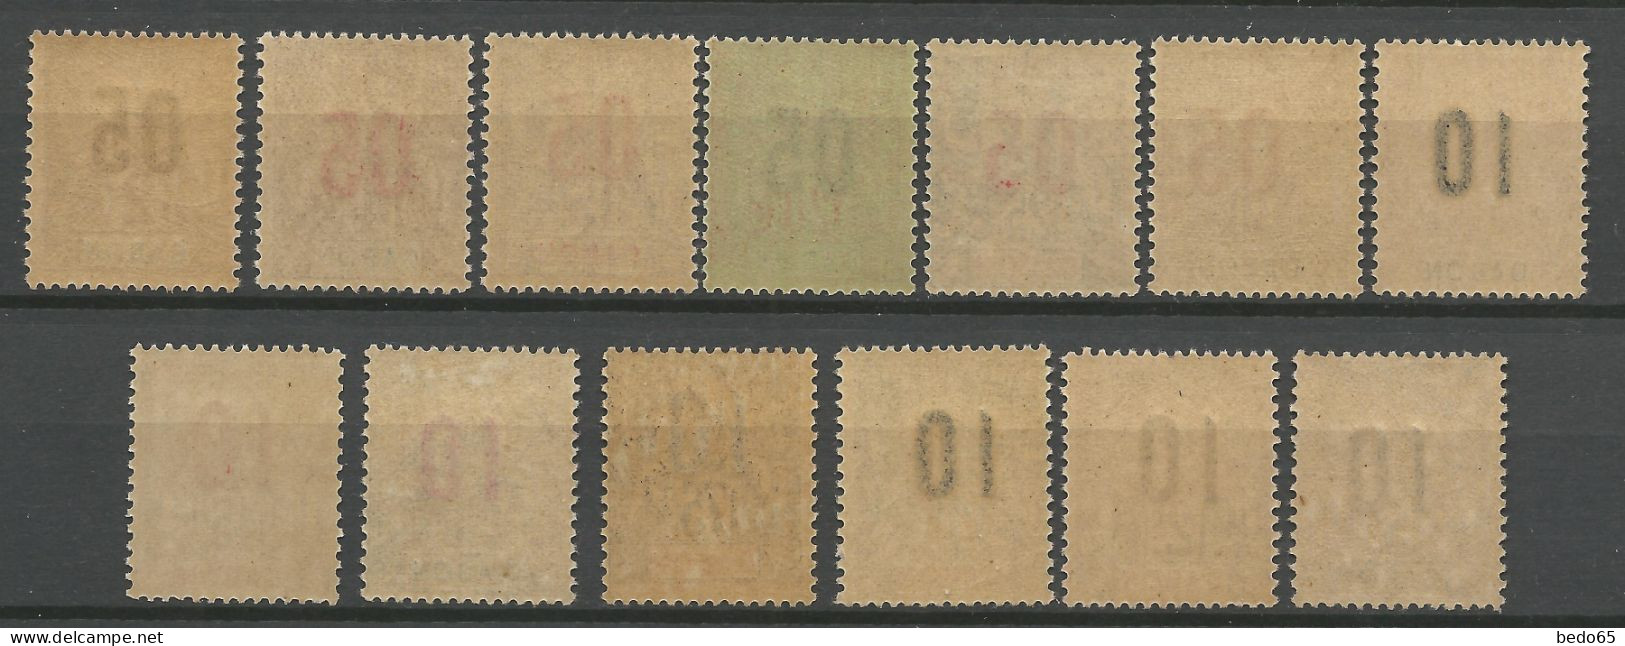 GABON N° 66 à 78 Série Complète NEUF** LUXE SANS CHARNIERE / Hingeless / MNH - Unused Stamps